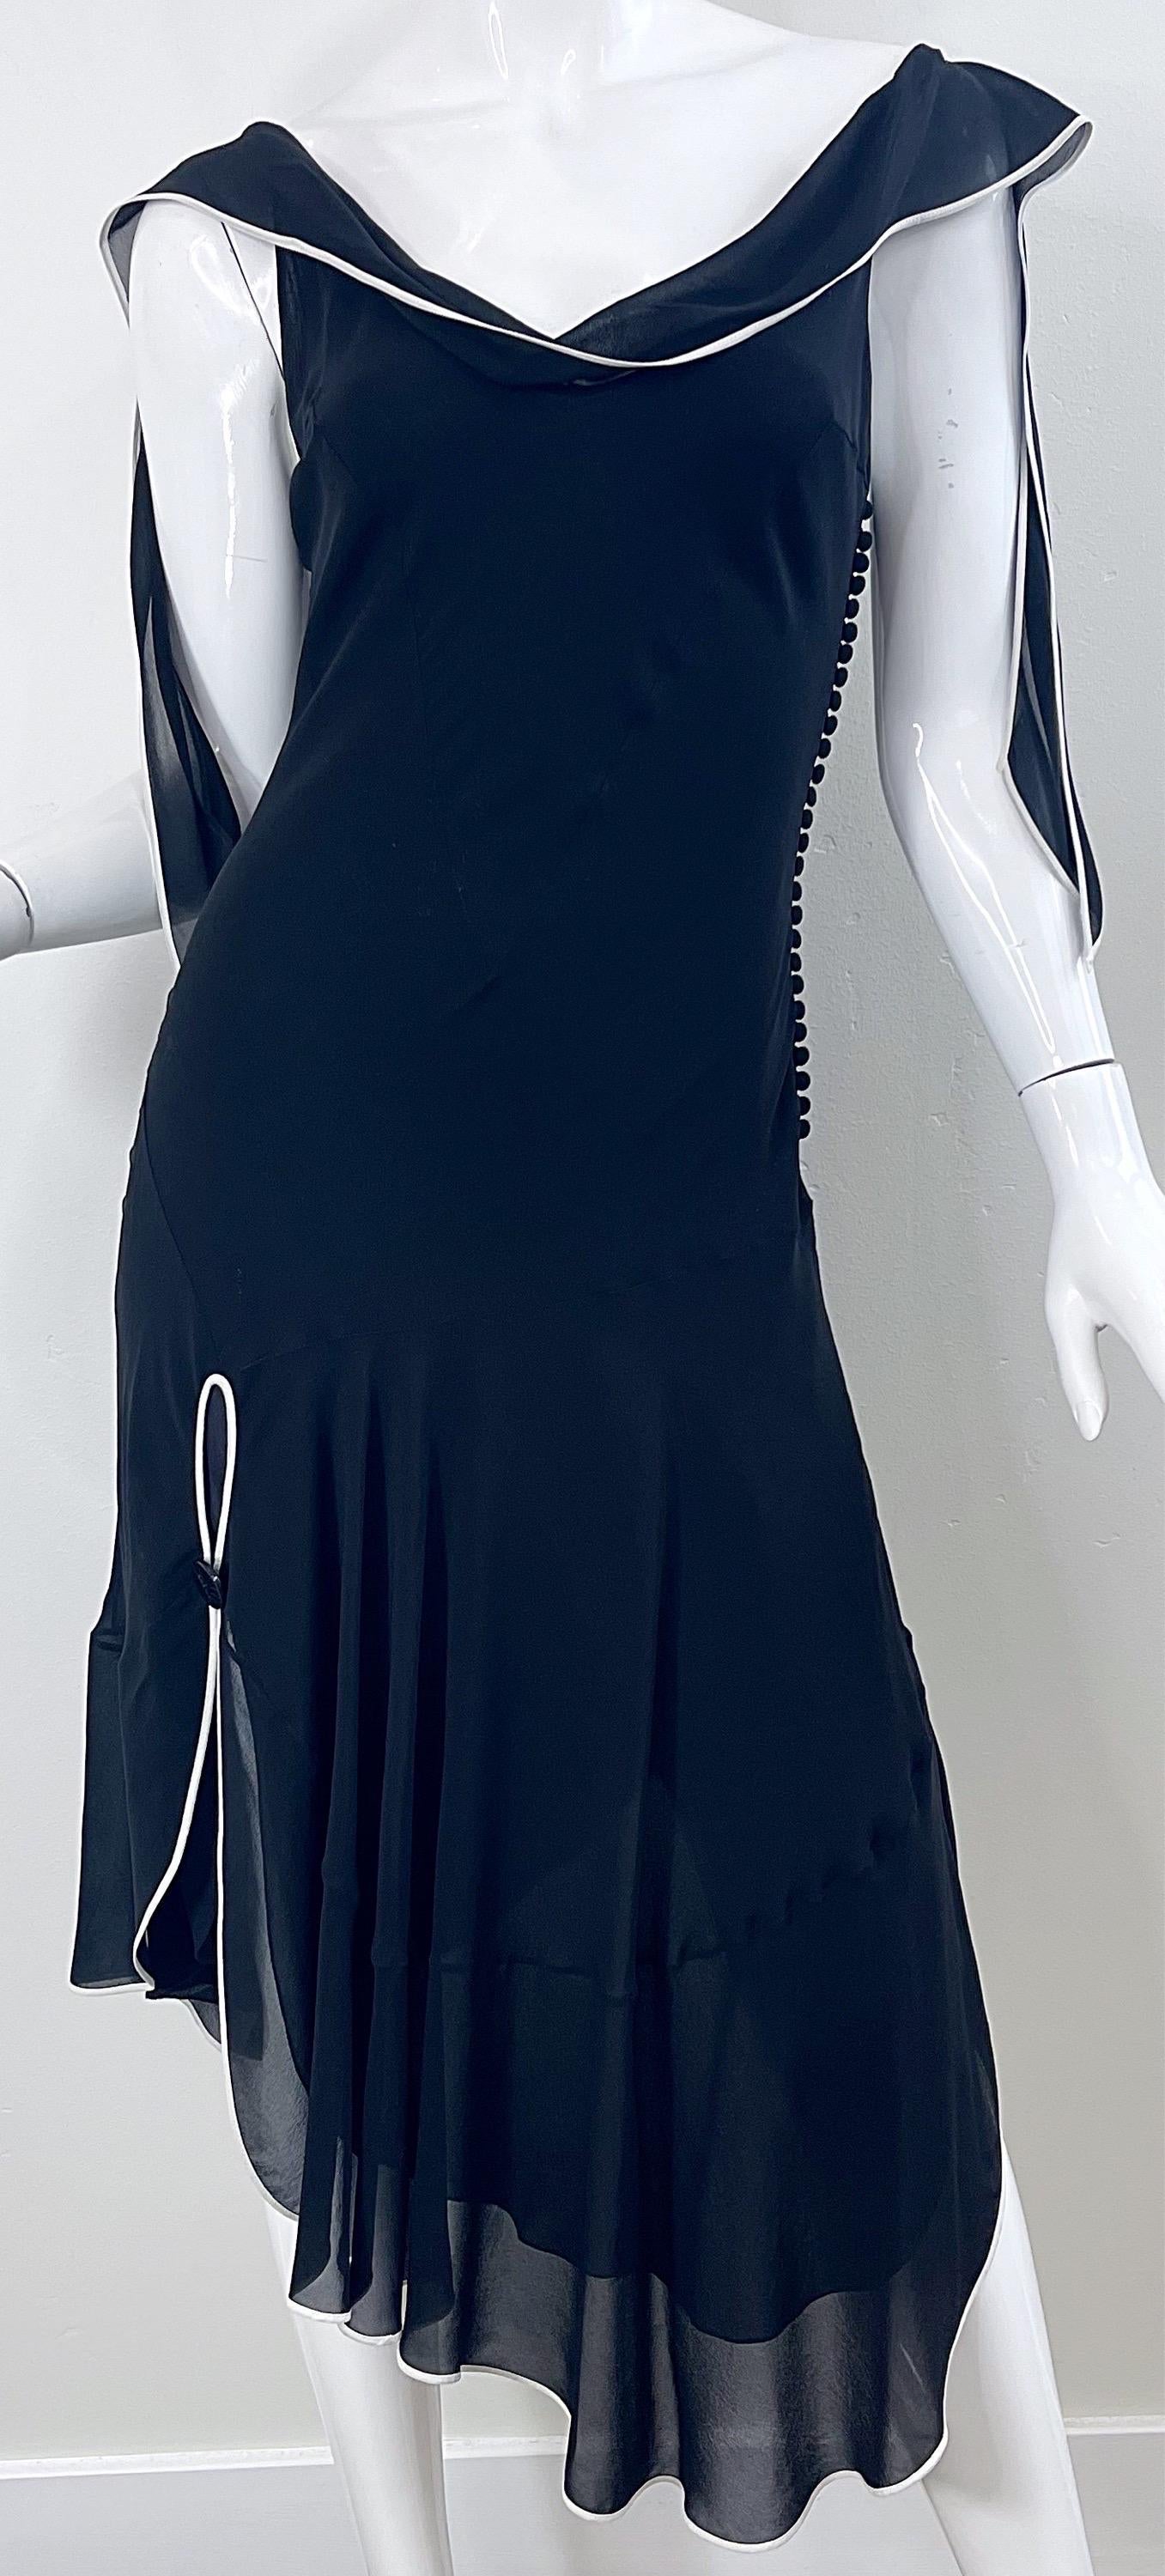 Christian Dior by John Galliano S/S 2005 Size 6 Black White Silk Chiffon Dress For Sale 4